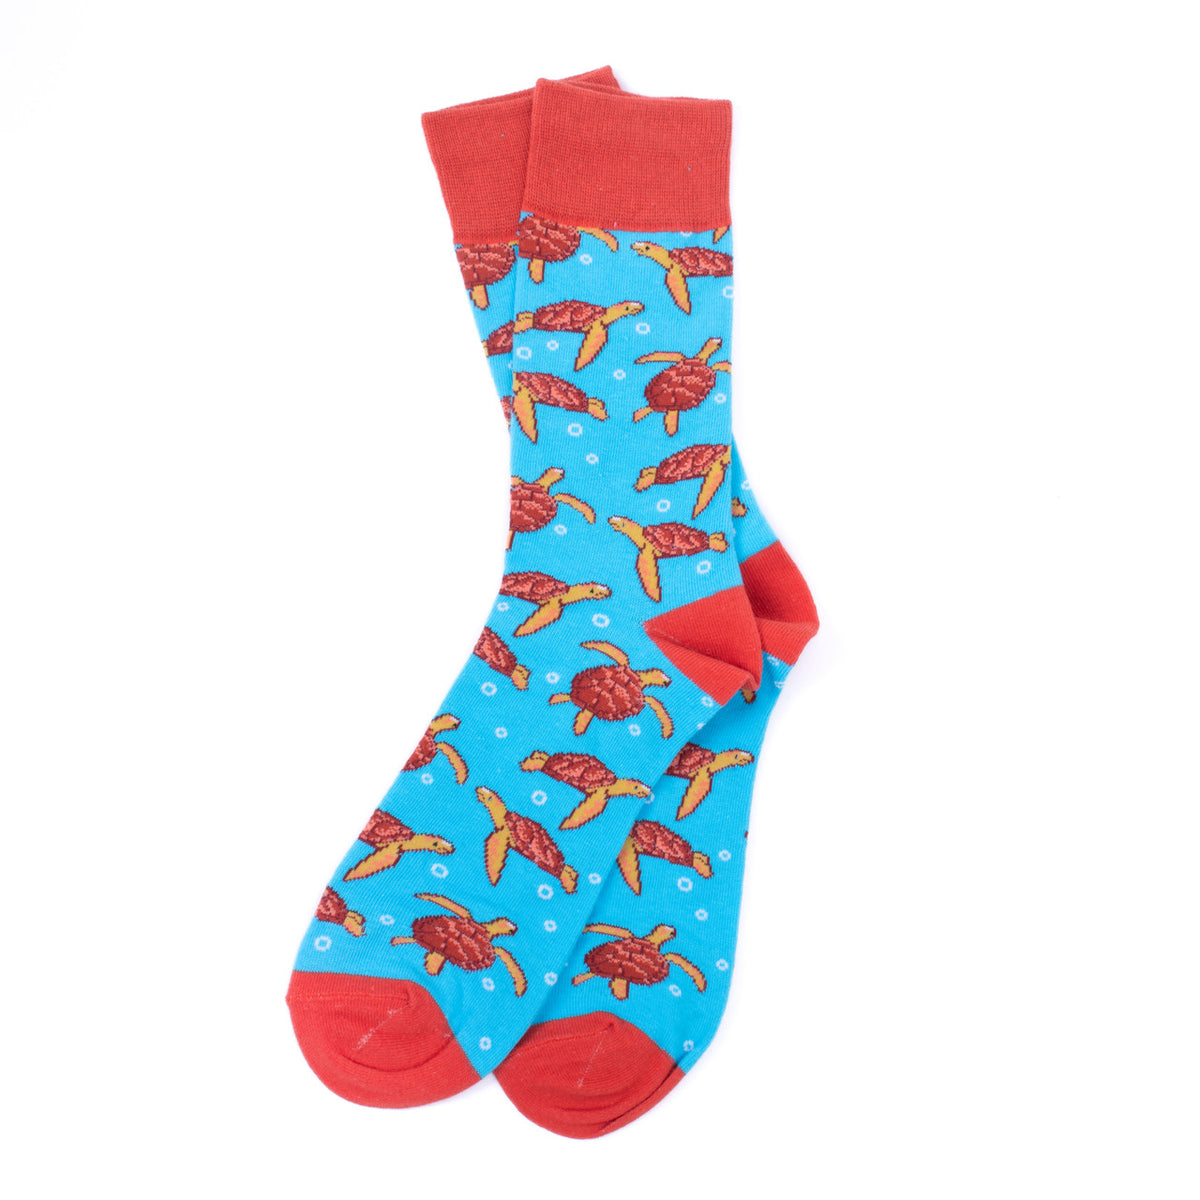 Selini New York - Socks Men's Sea Turtles